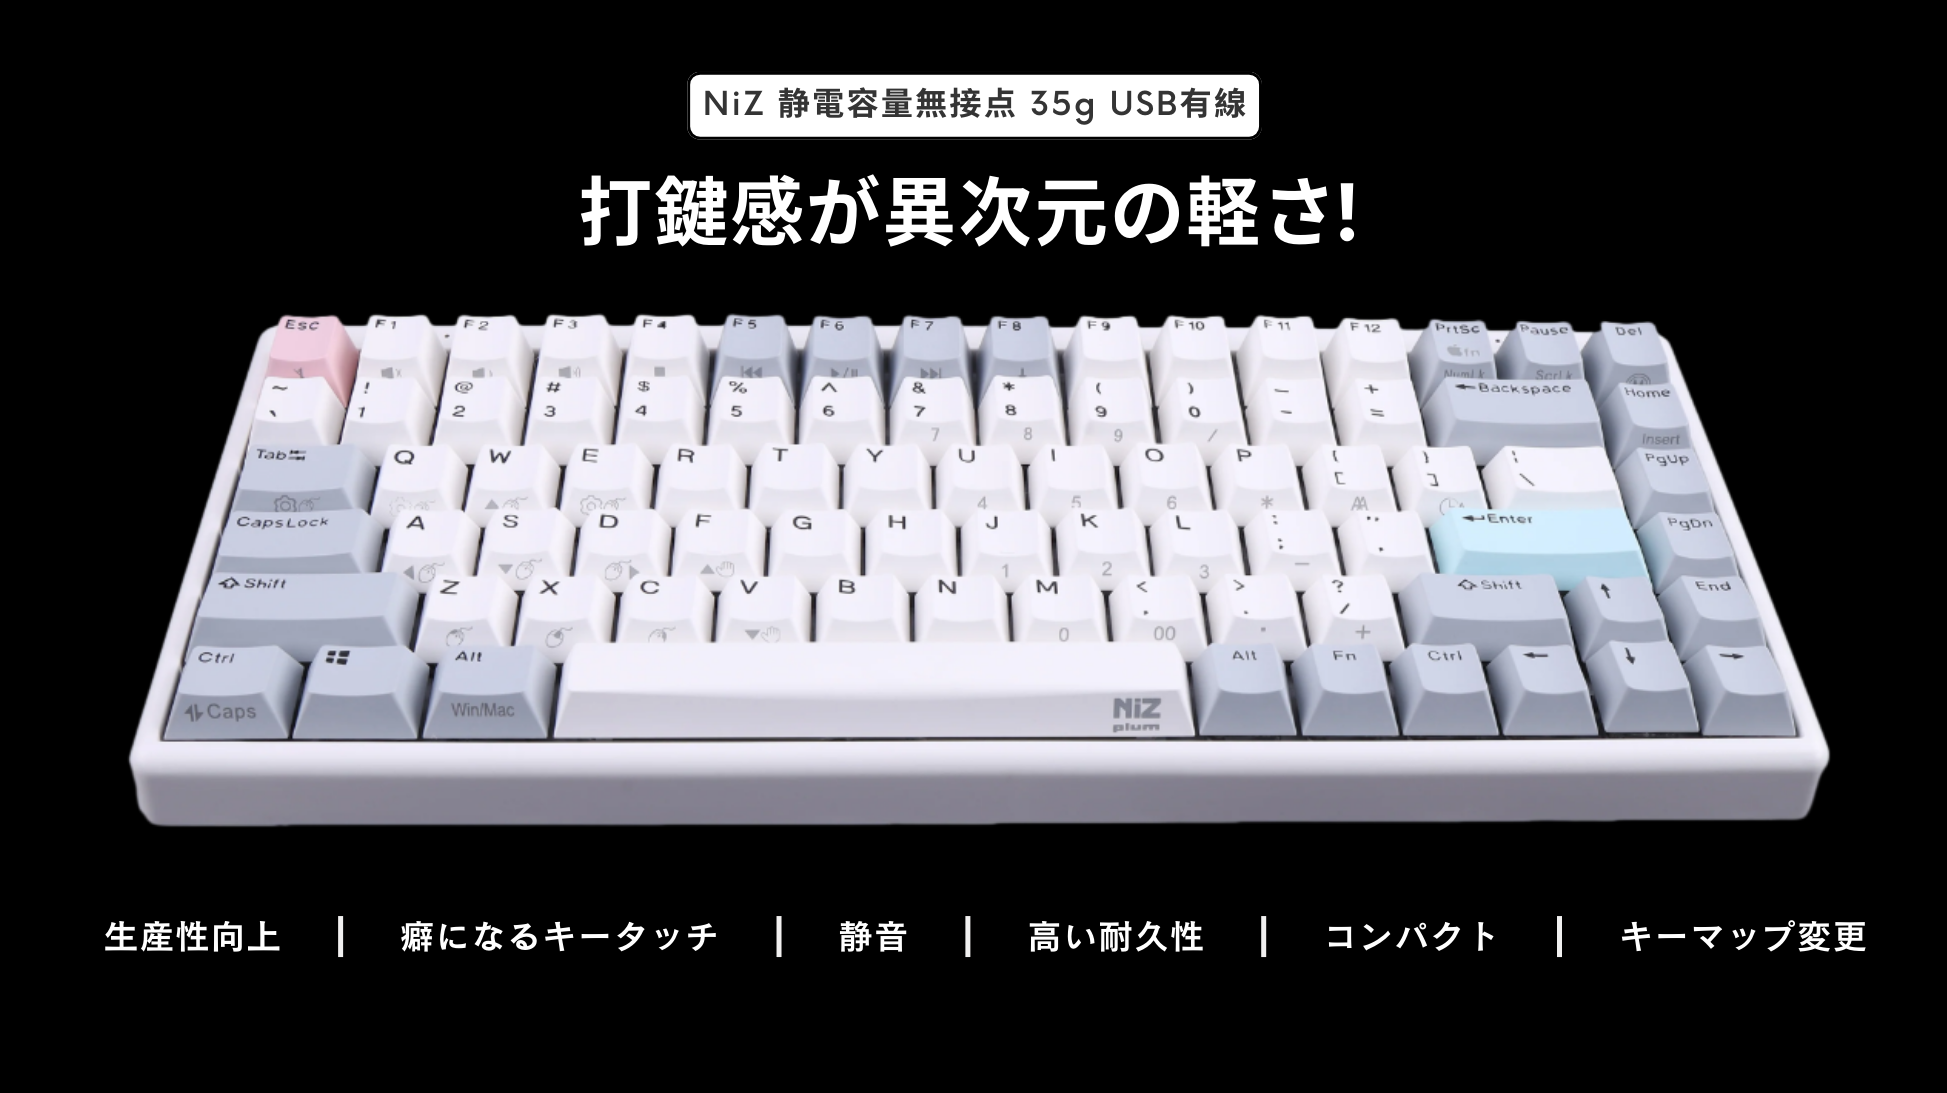 AKEEYO、柔らかな触感の無接点構造を採用した「NIZ mini84キーボード」を発売